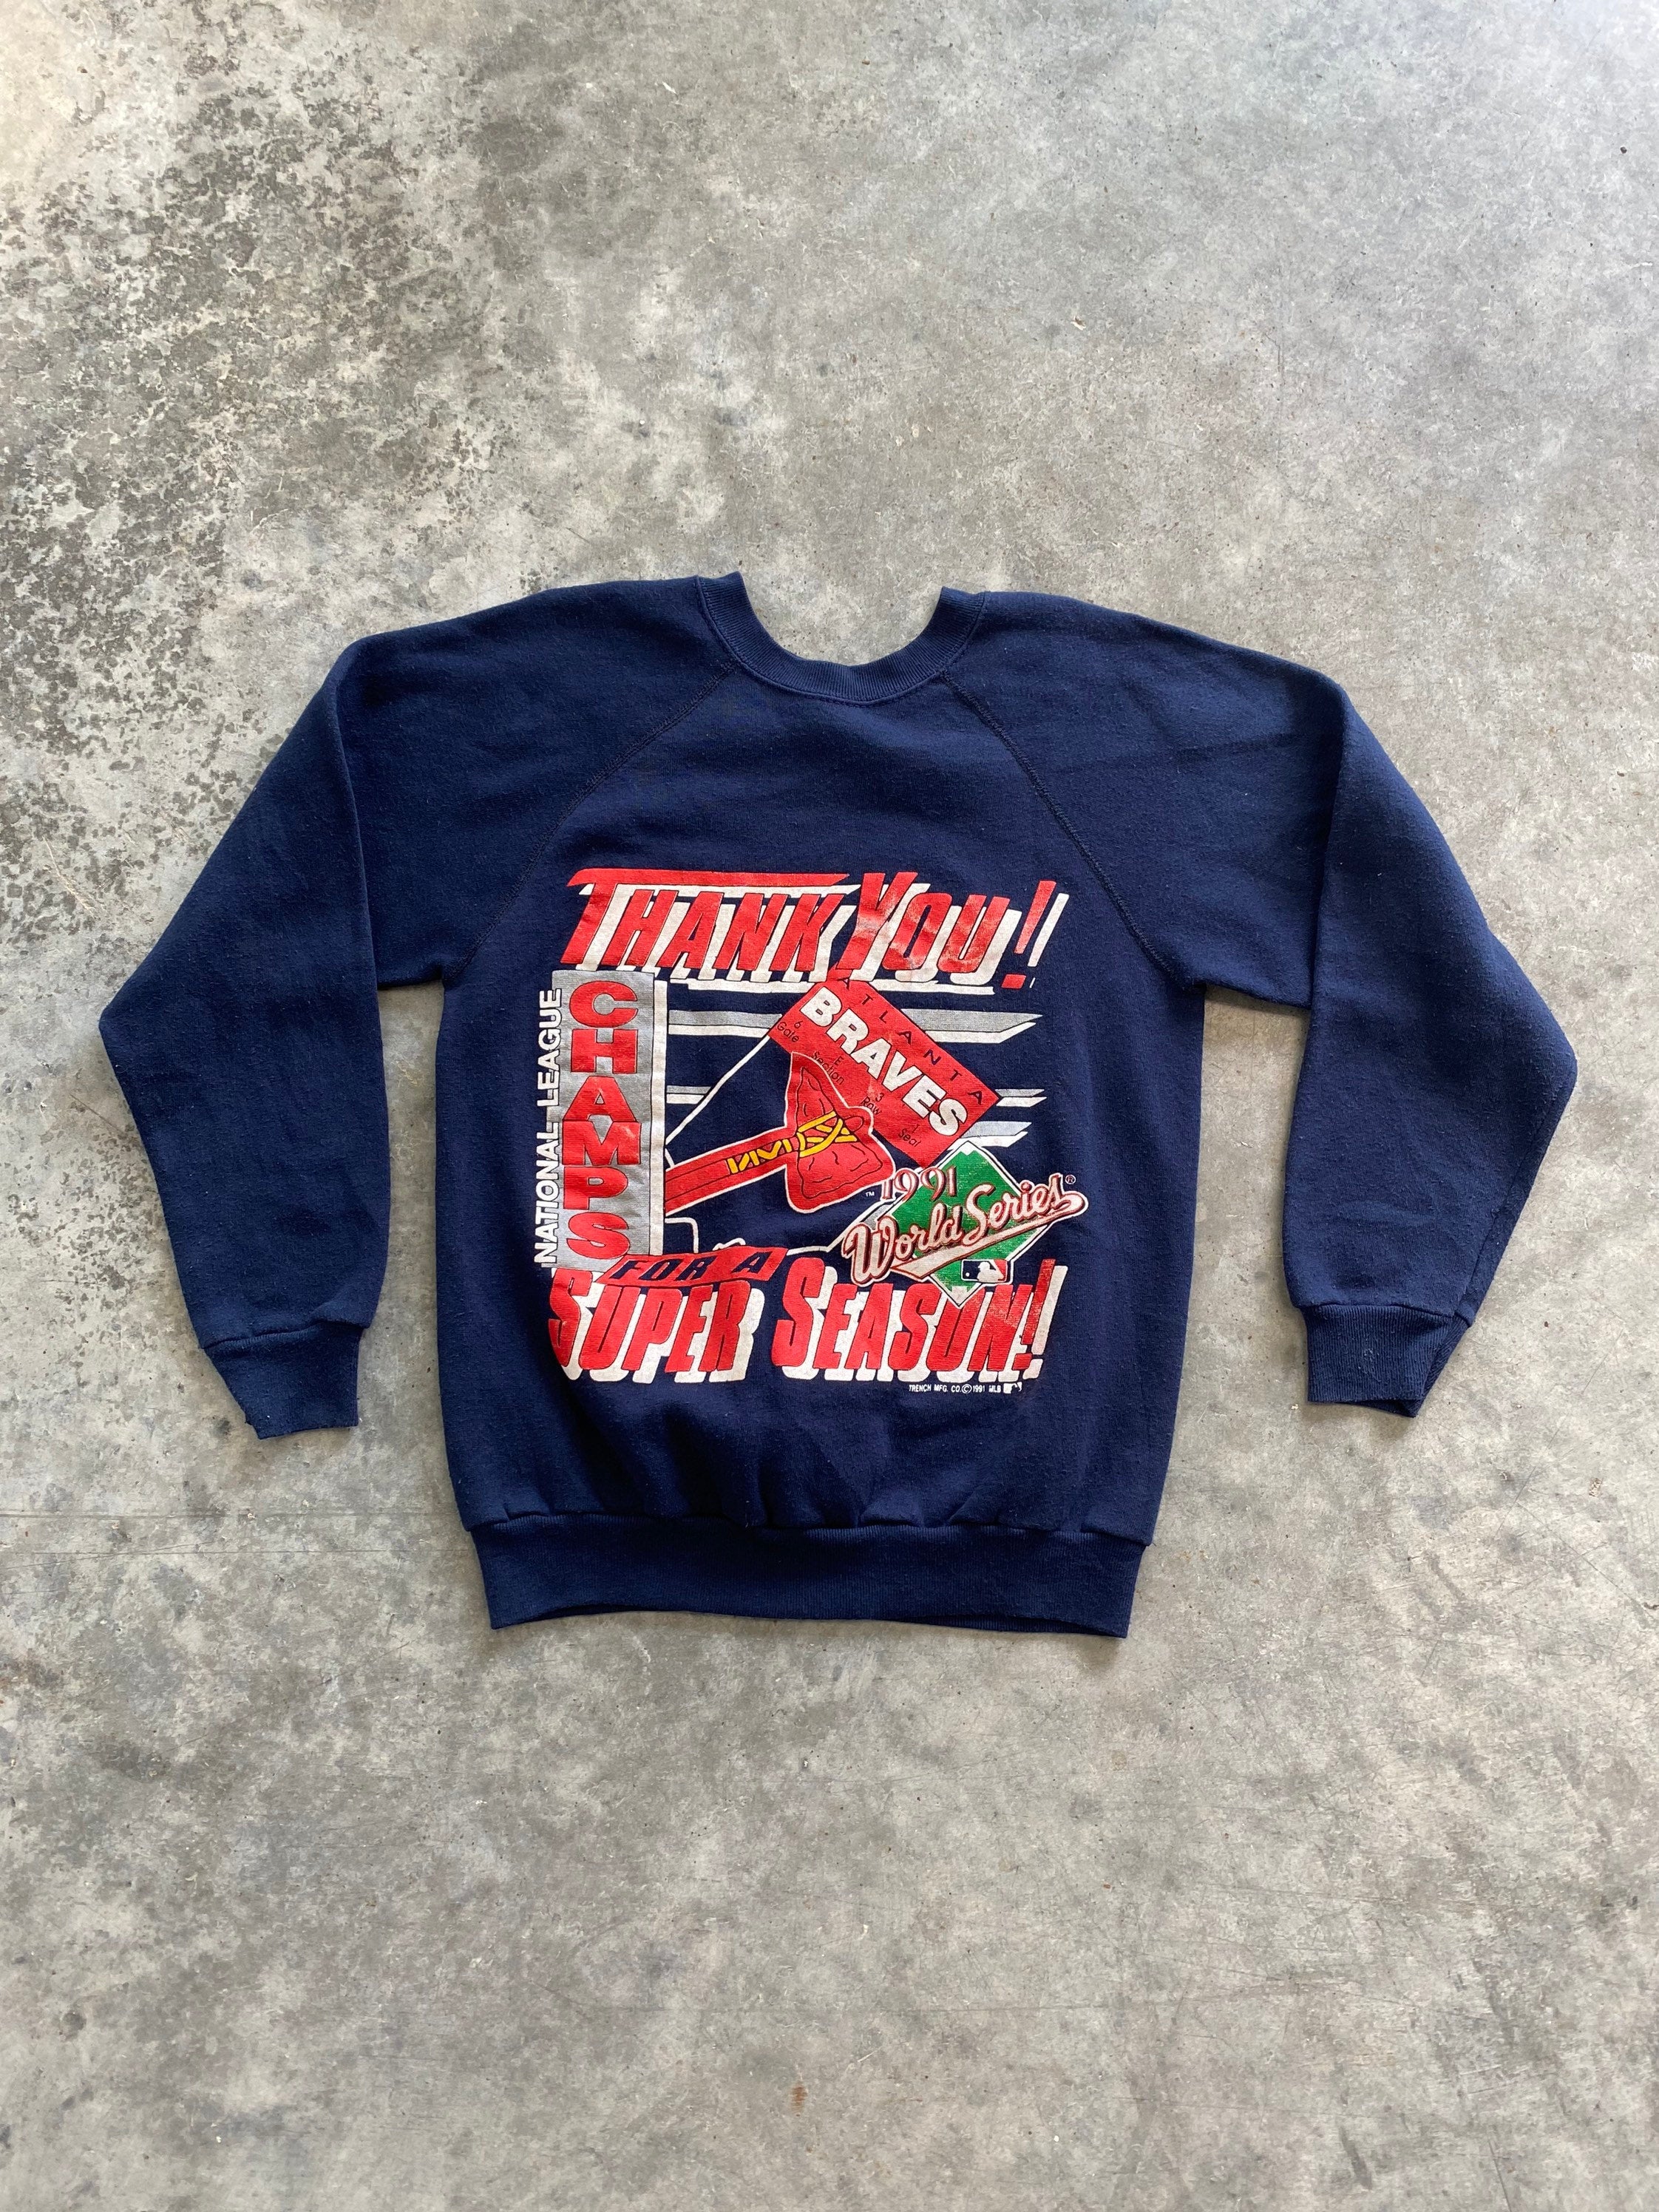 Vintage 1991 Atlanta Braves National League Champions Sweatshirt